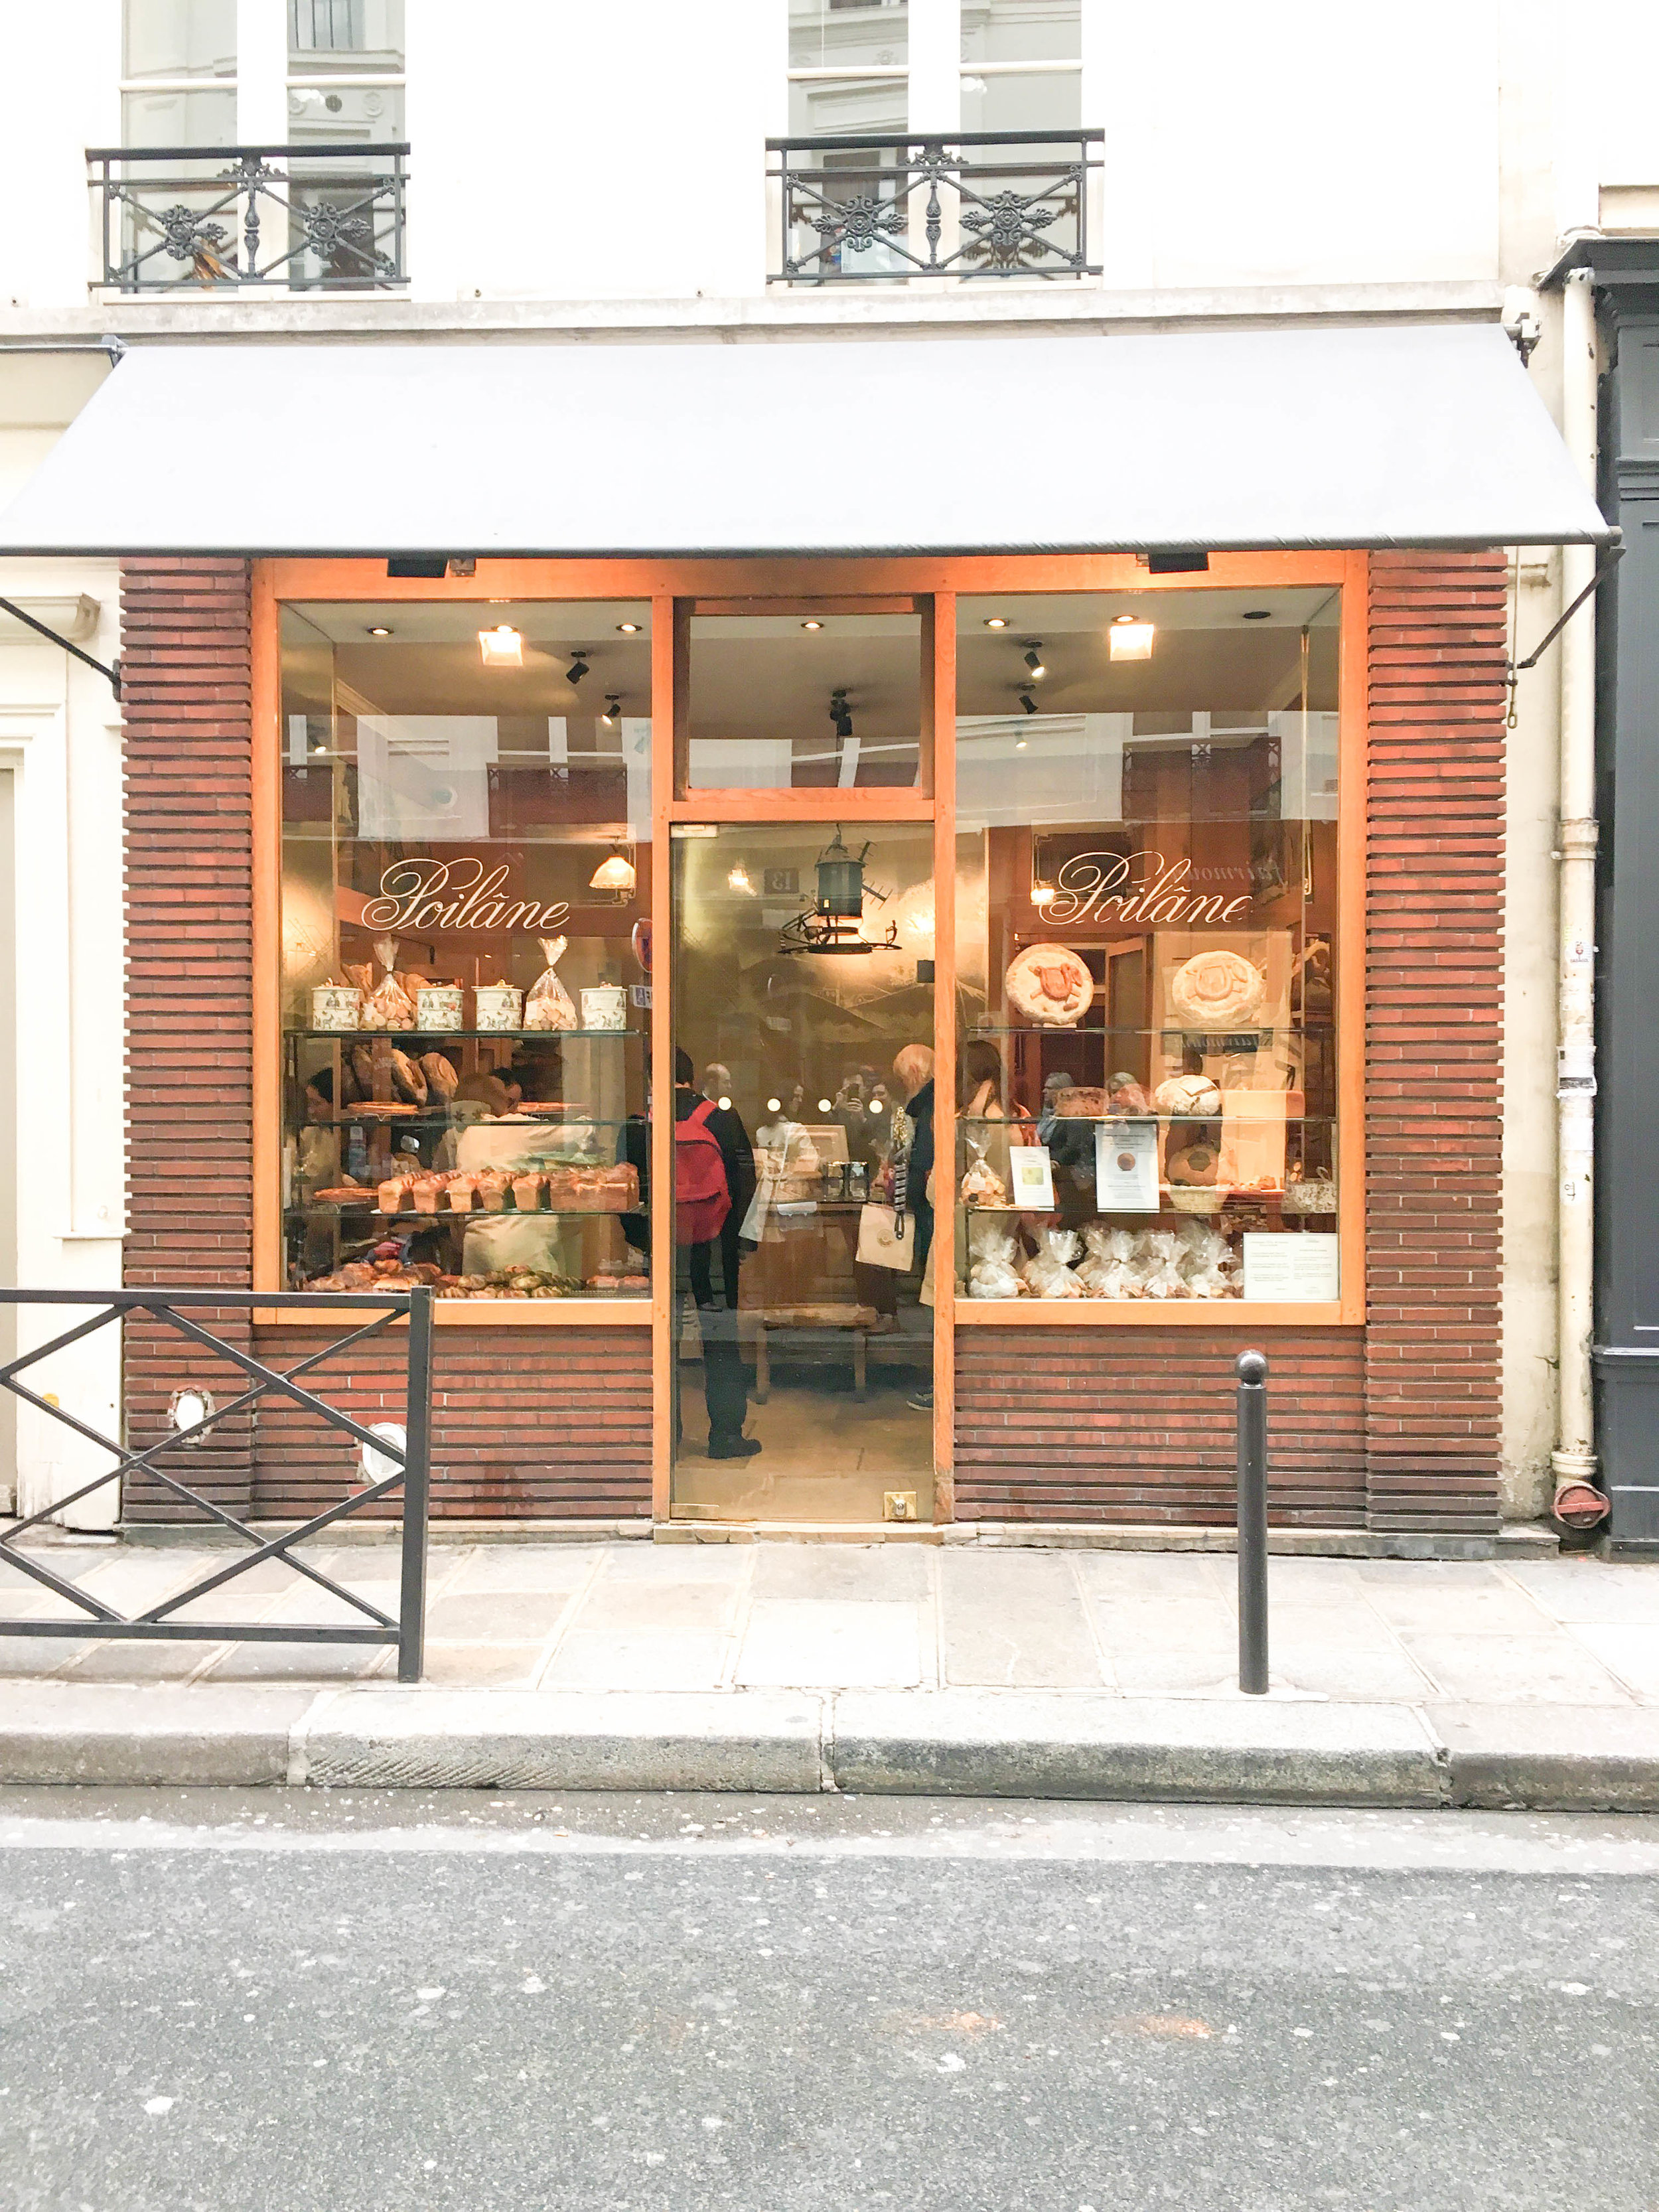 Poliane Bakery in Paris